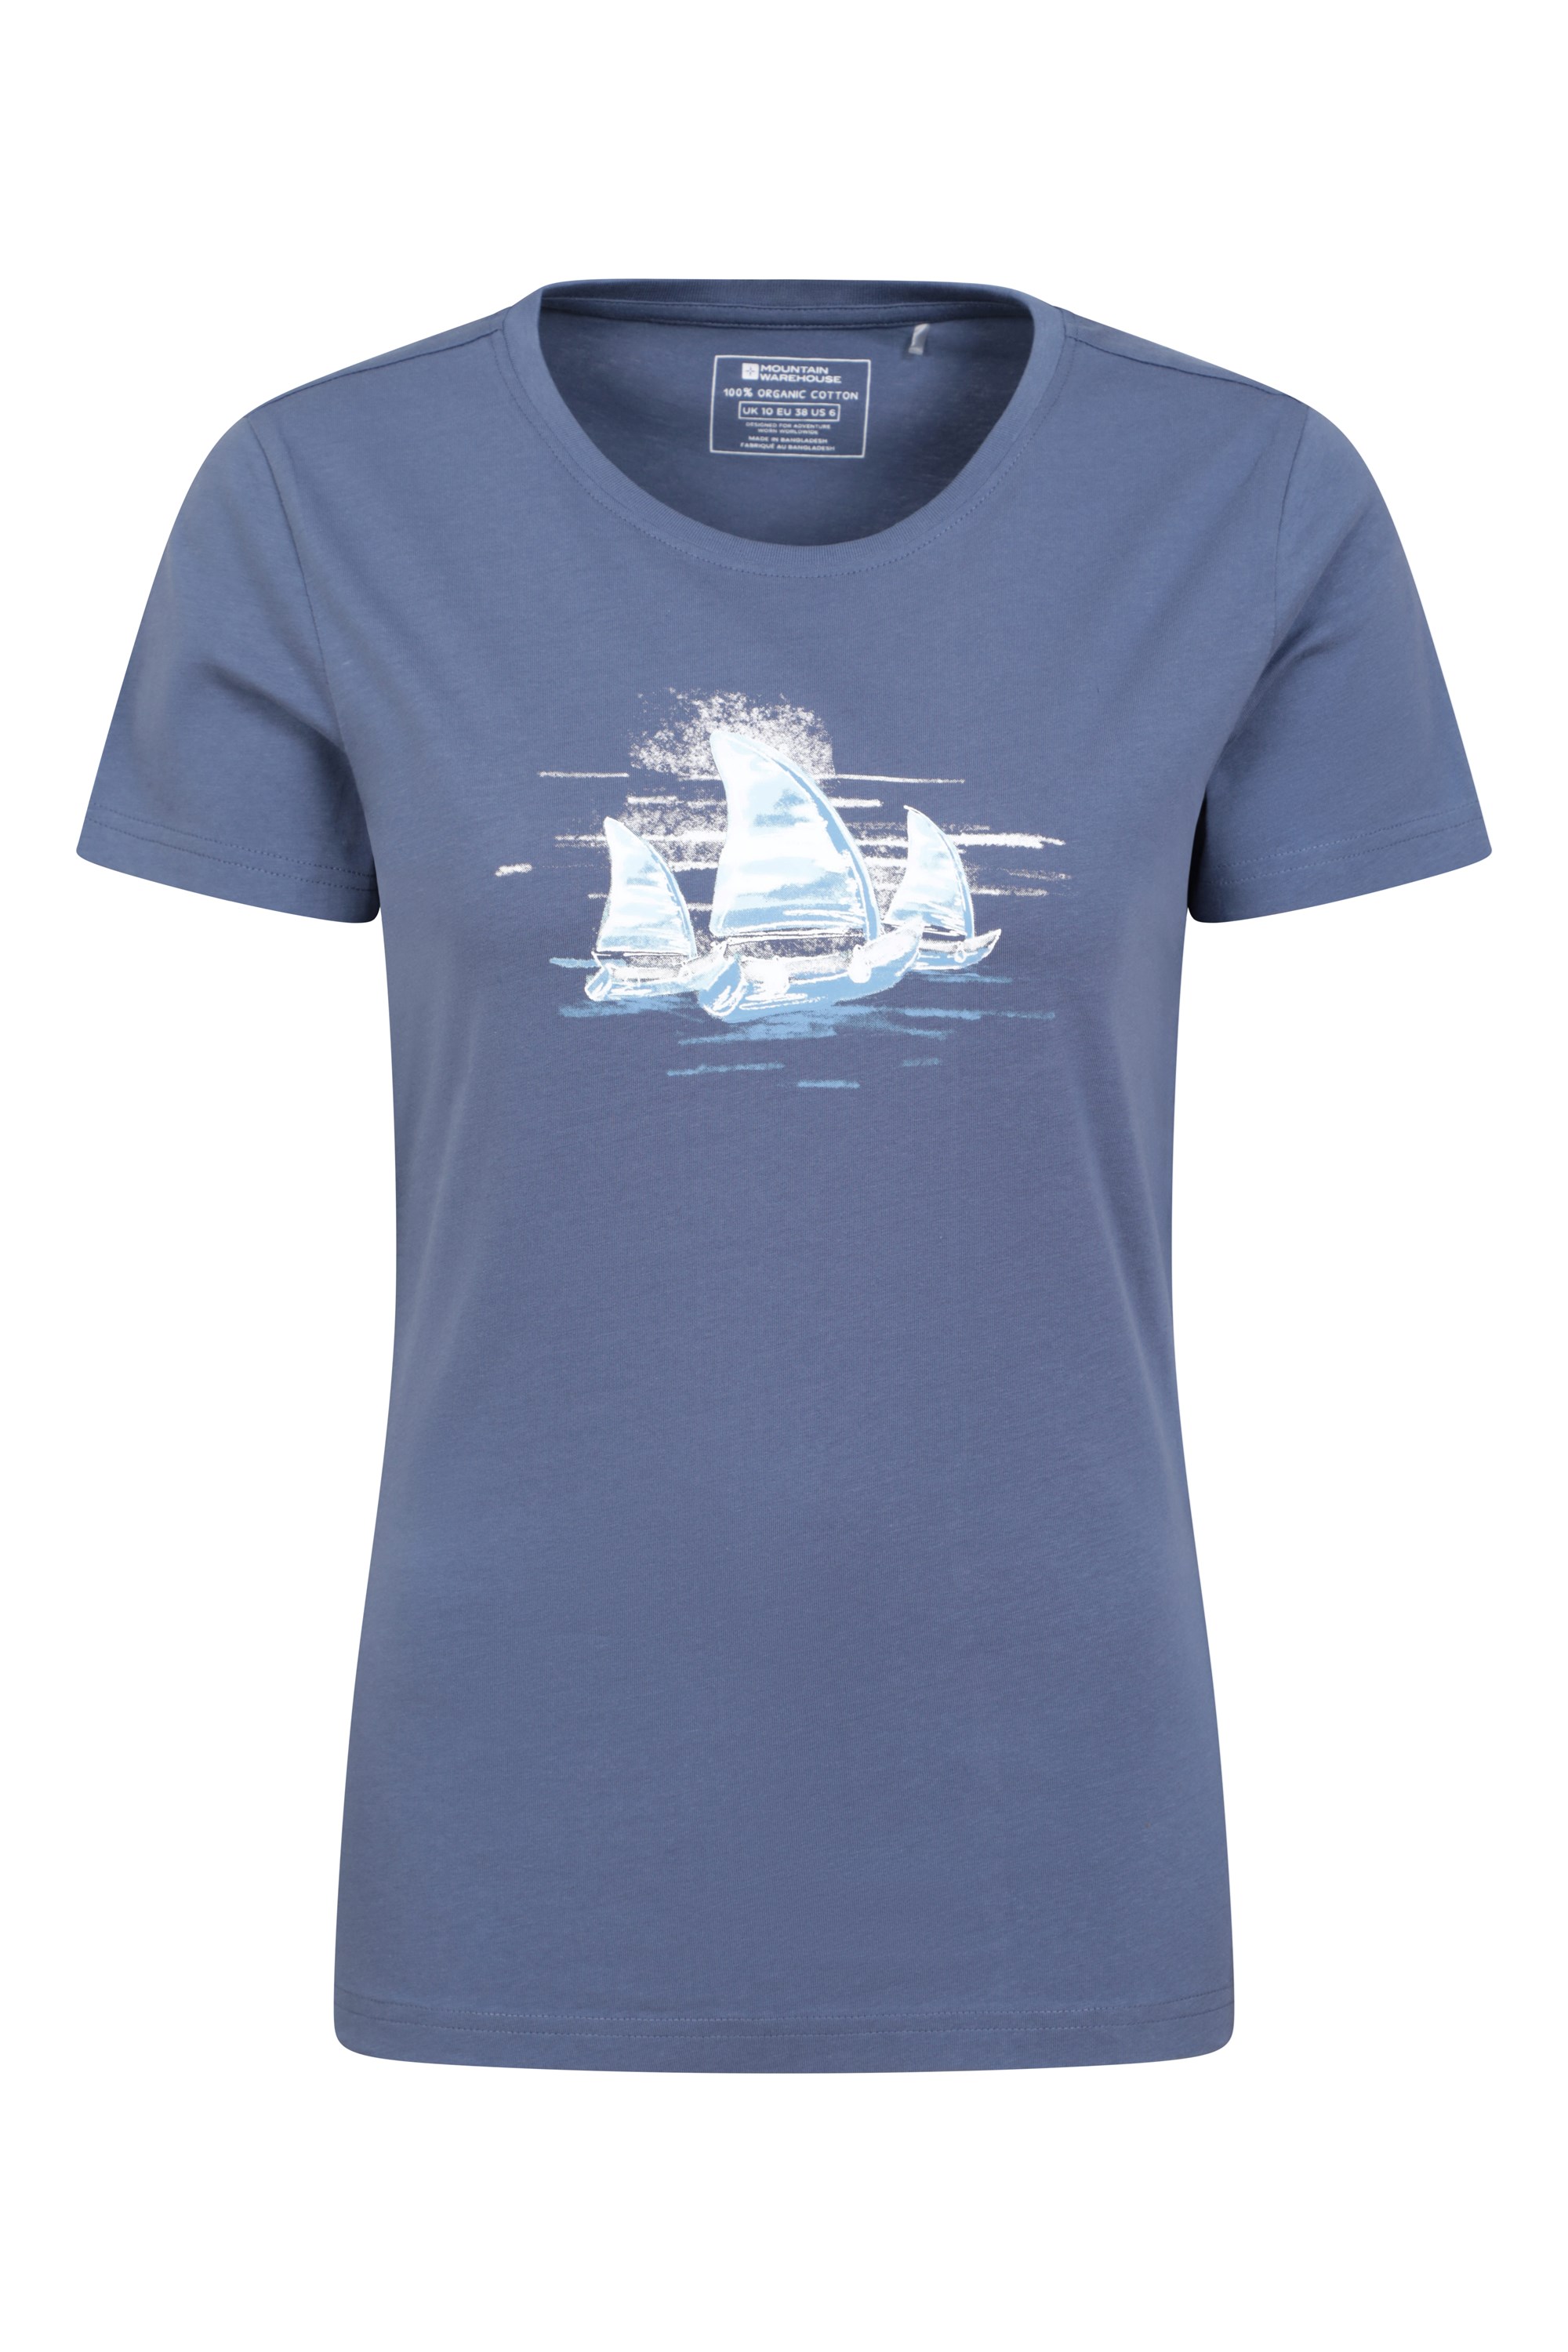 Misty Sail Boat Womens Organic T-Shirt - Blue